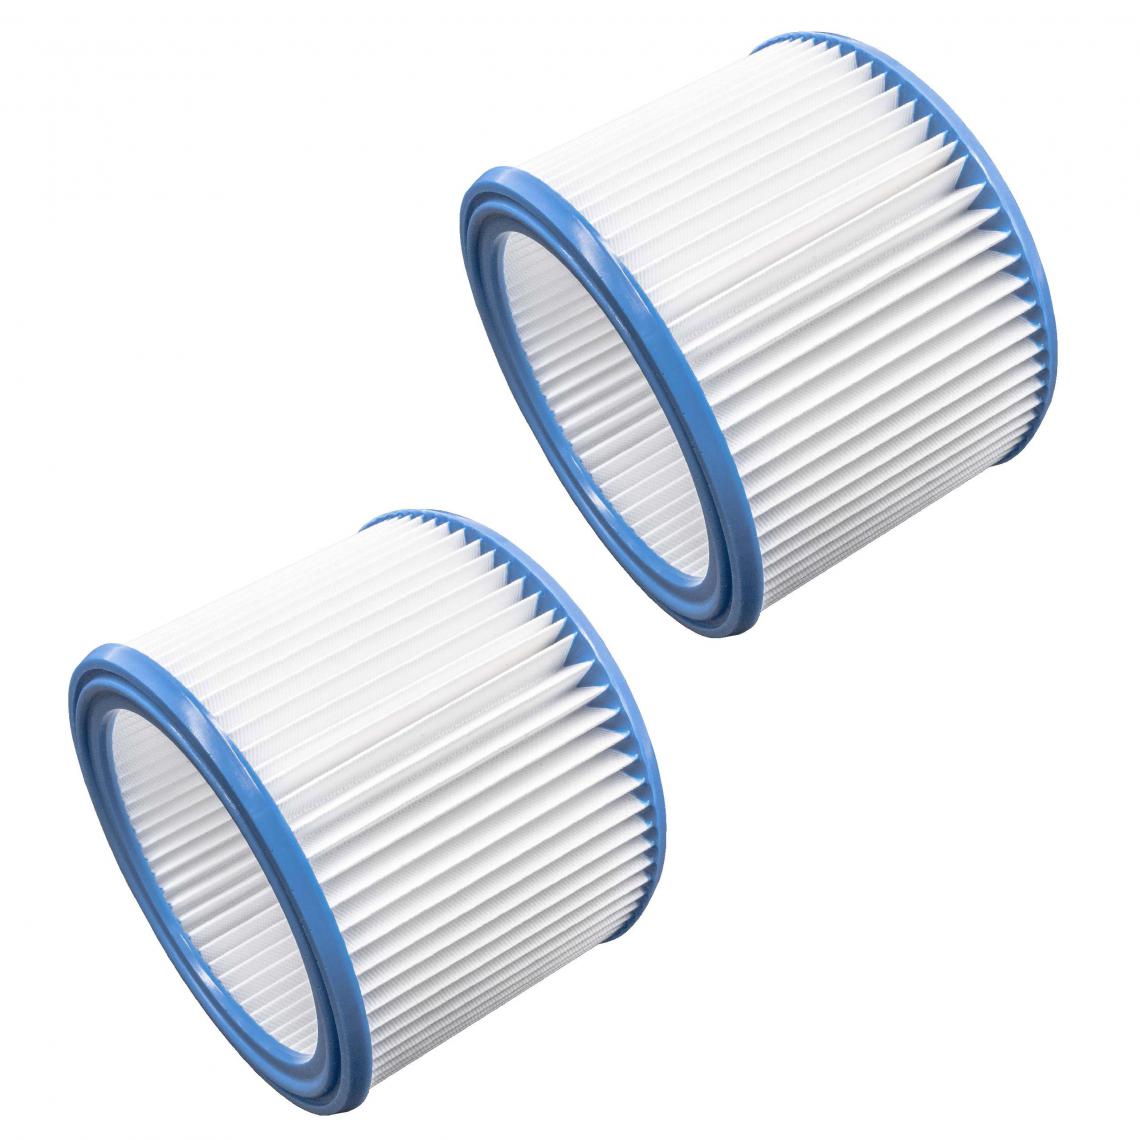 Vhbw - vhbw Set de filtres 2x Filtre plissé compatible avec WAP Turbo SSR, XL, XL-25, XL-E aspirateur à sec ou humide - Filtre à cartouche - Accessoire entretien des sols